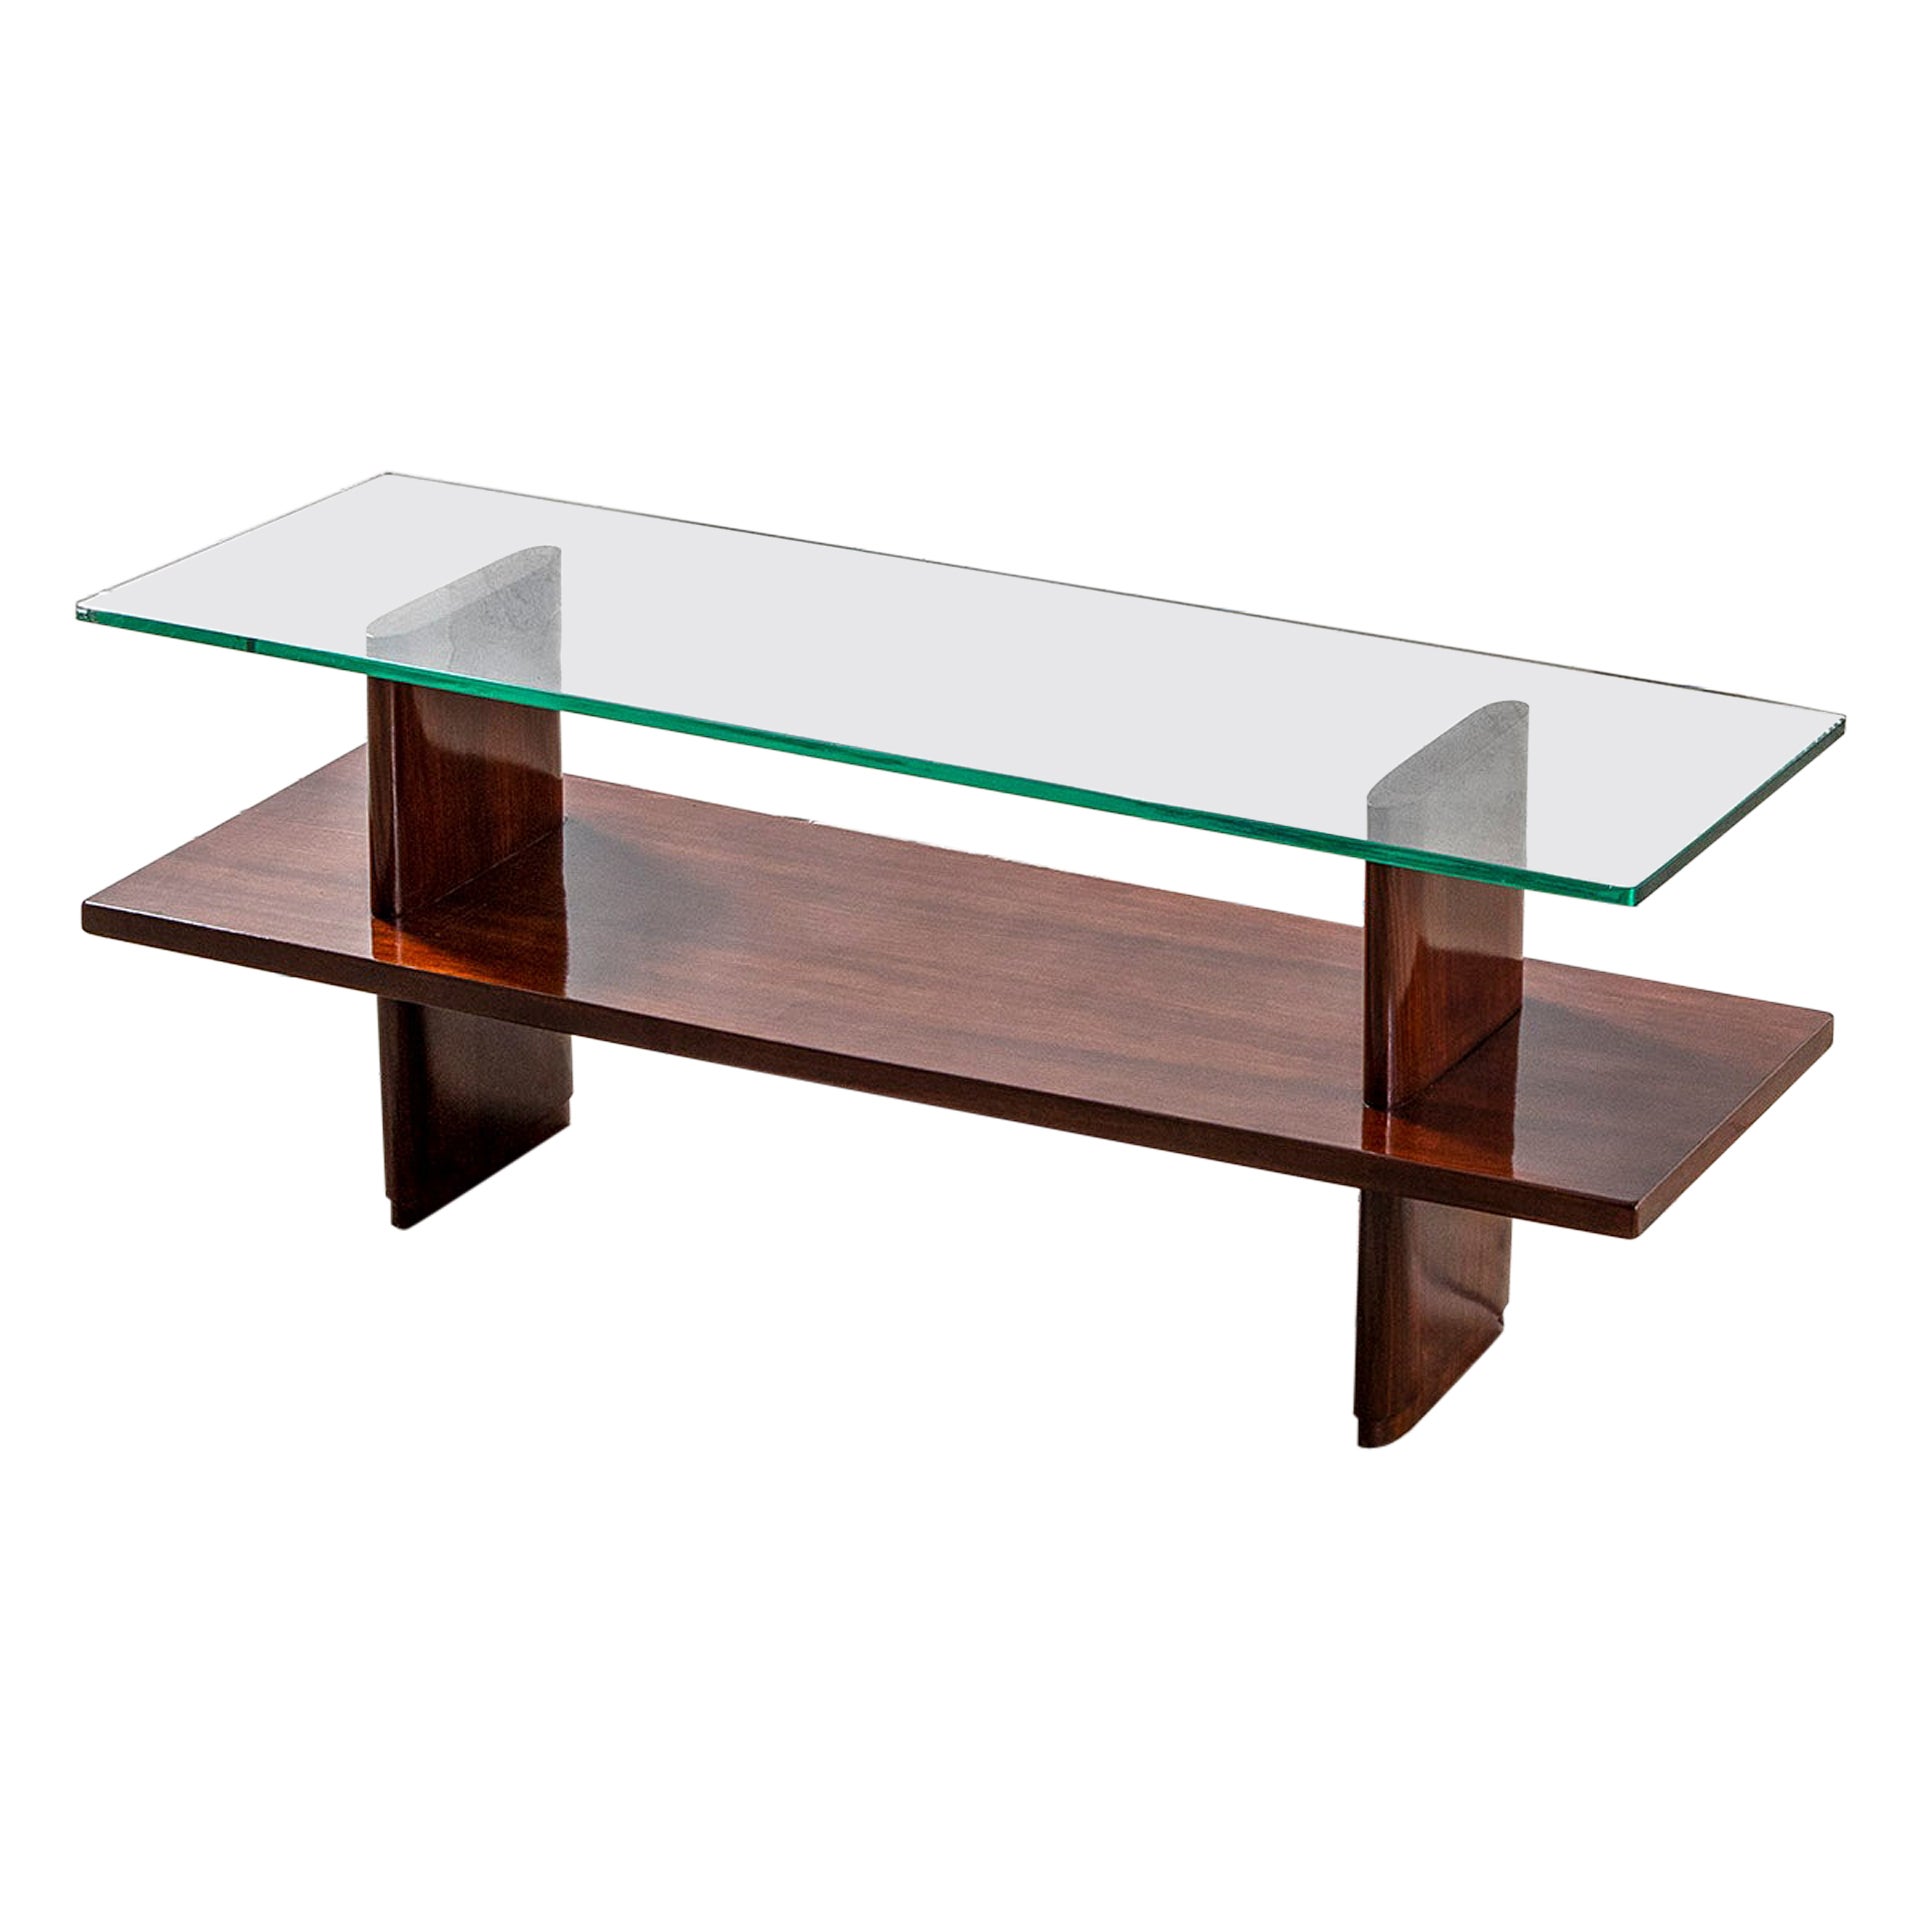 20th Century Osvaldo Borsani Wood and Glass Coffee Table by Arredamenti Varedo For Sale